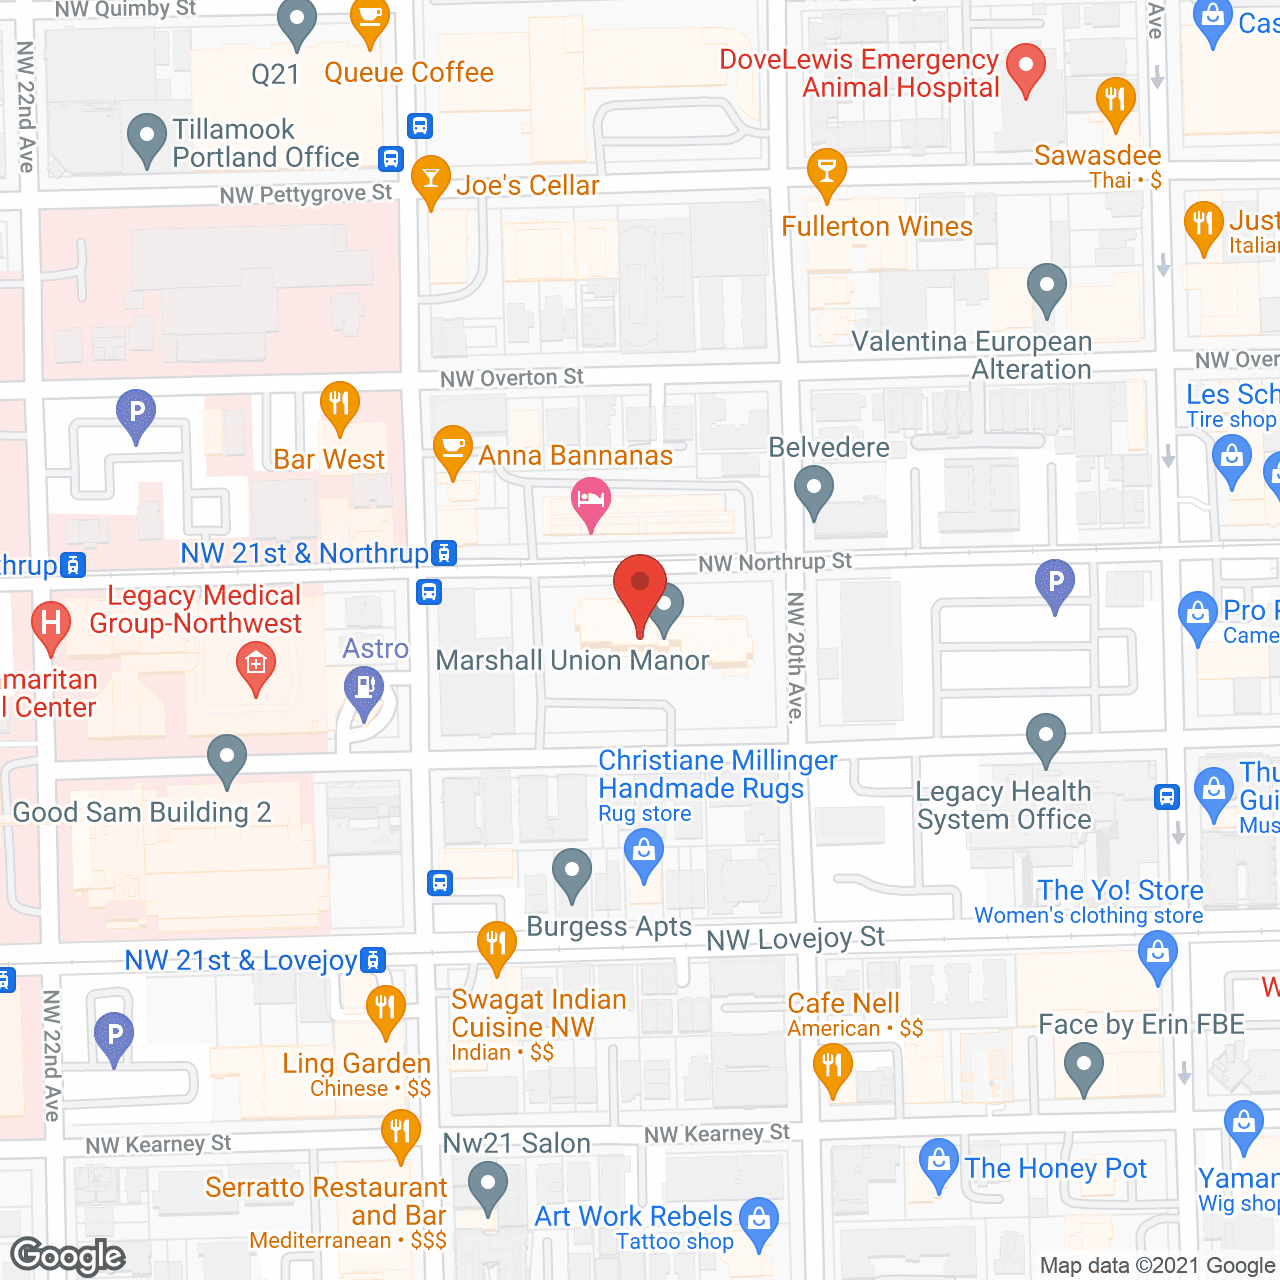 Marshall Union Manor in google map